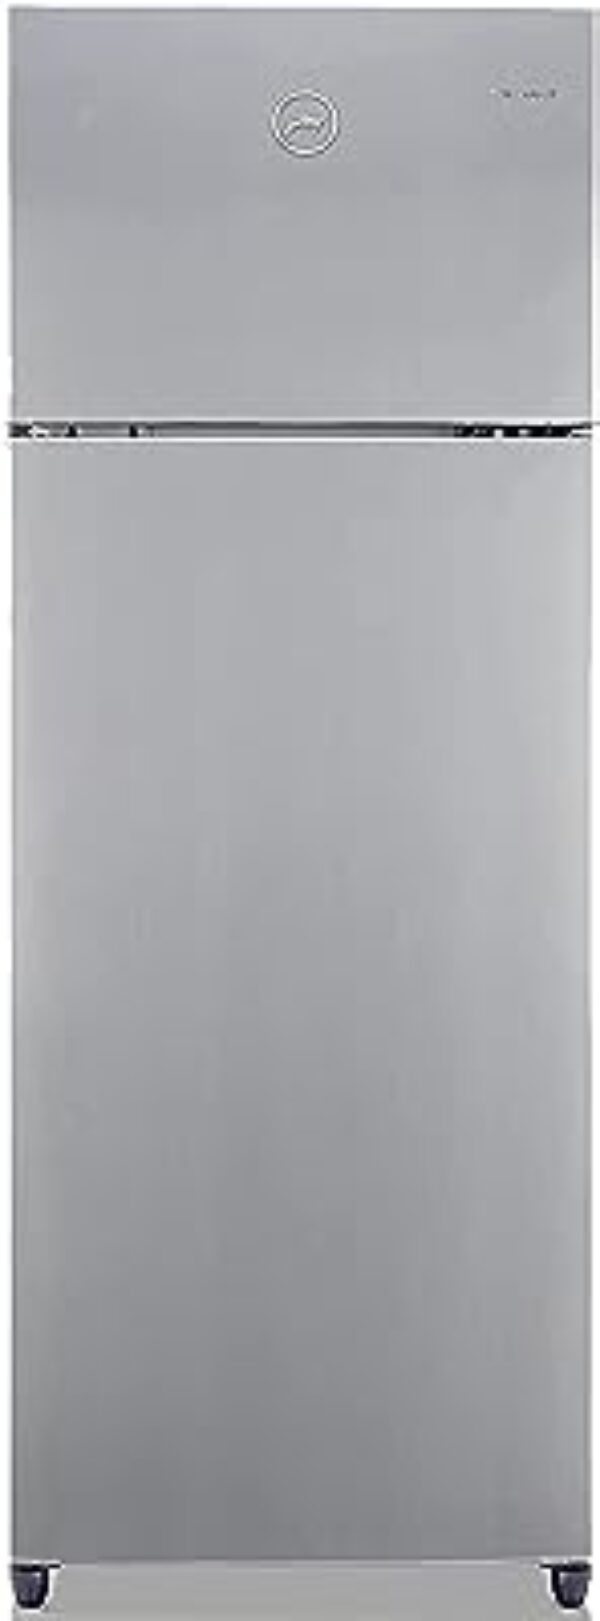 Godrej 265L Inverter Double Door Refrigerator